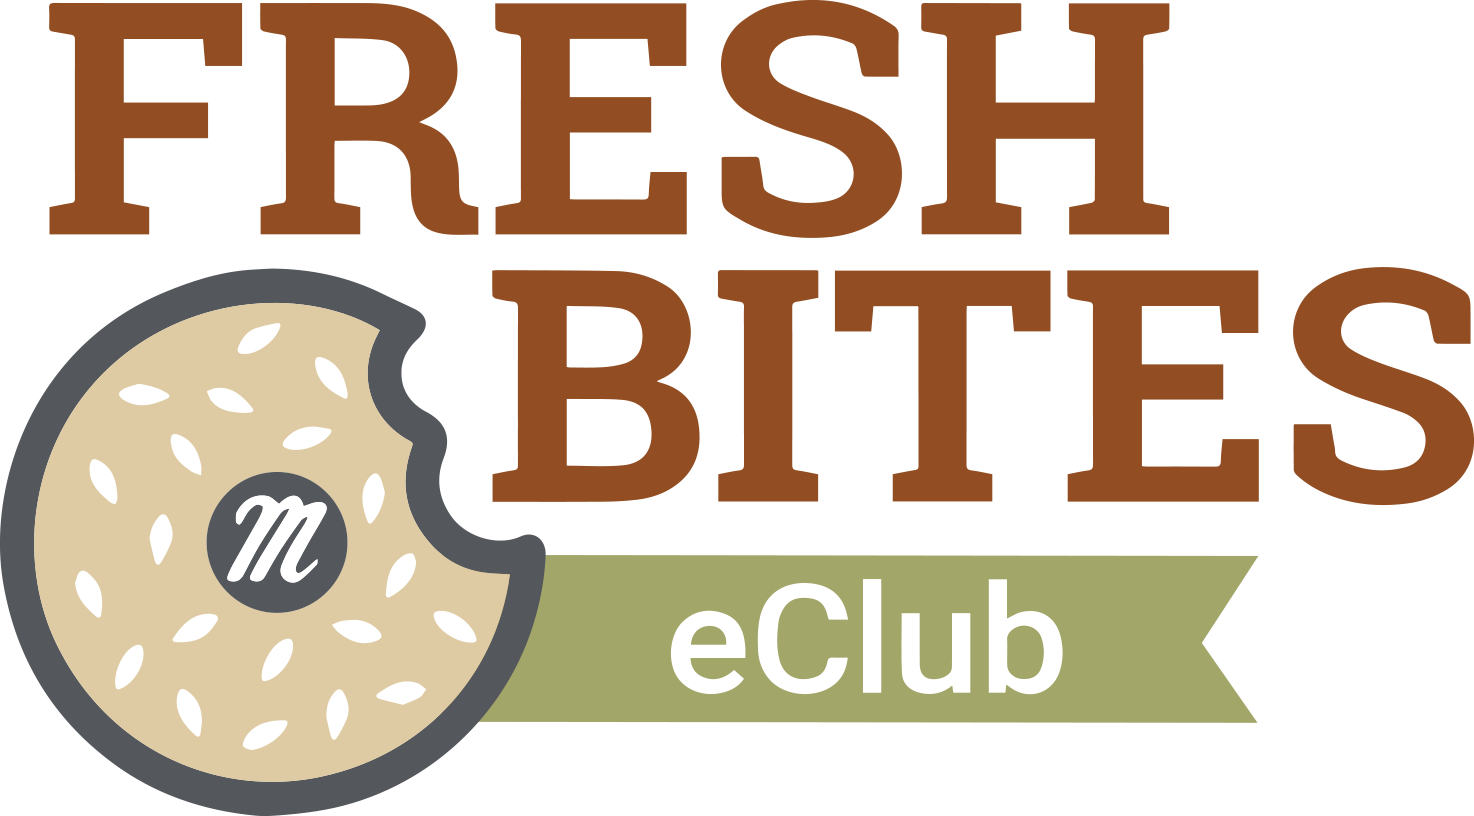 Fresh Bites eclub logo